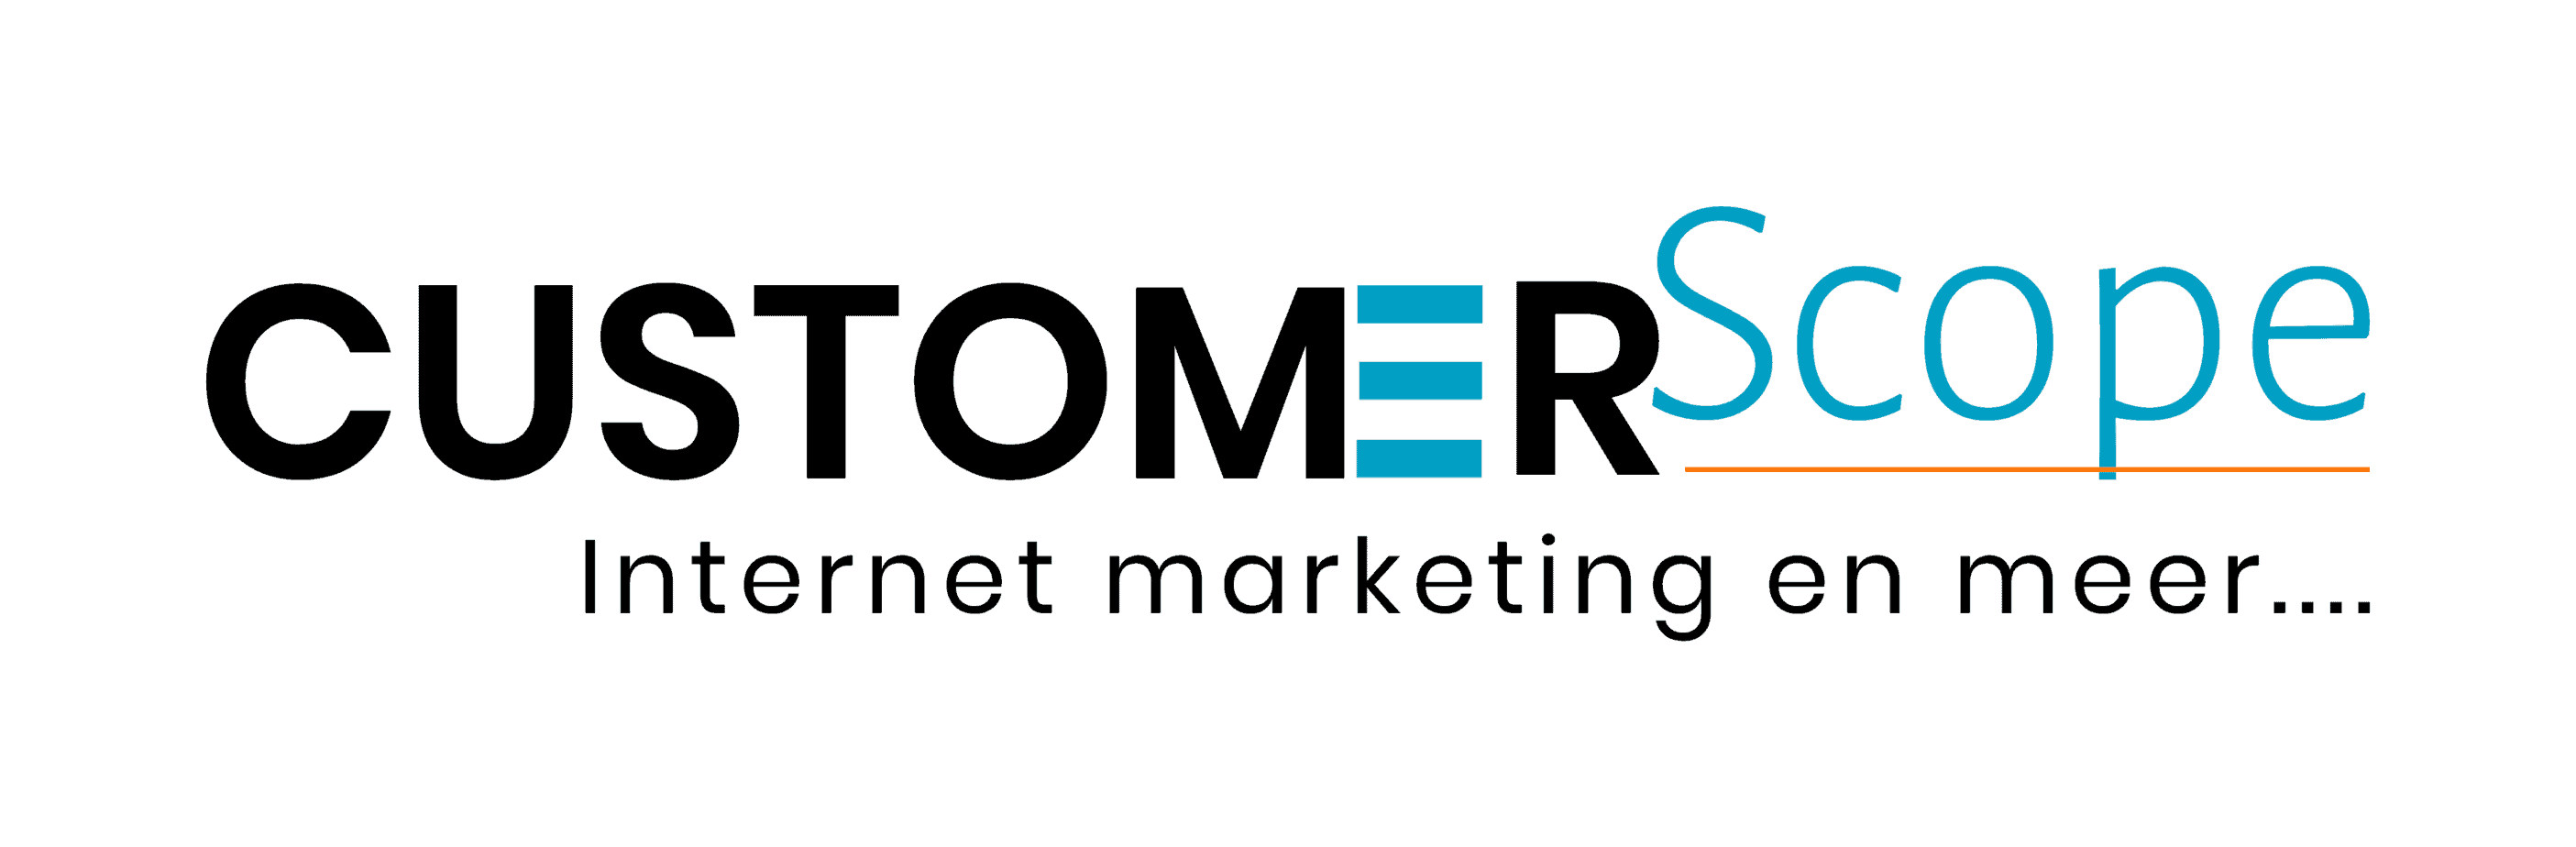 CustomerScope orgineel logo